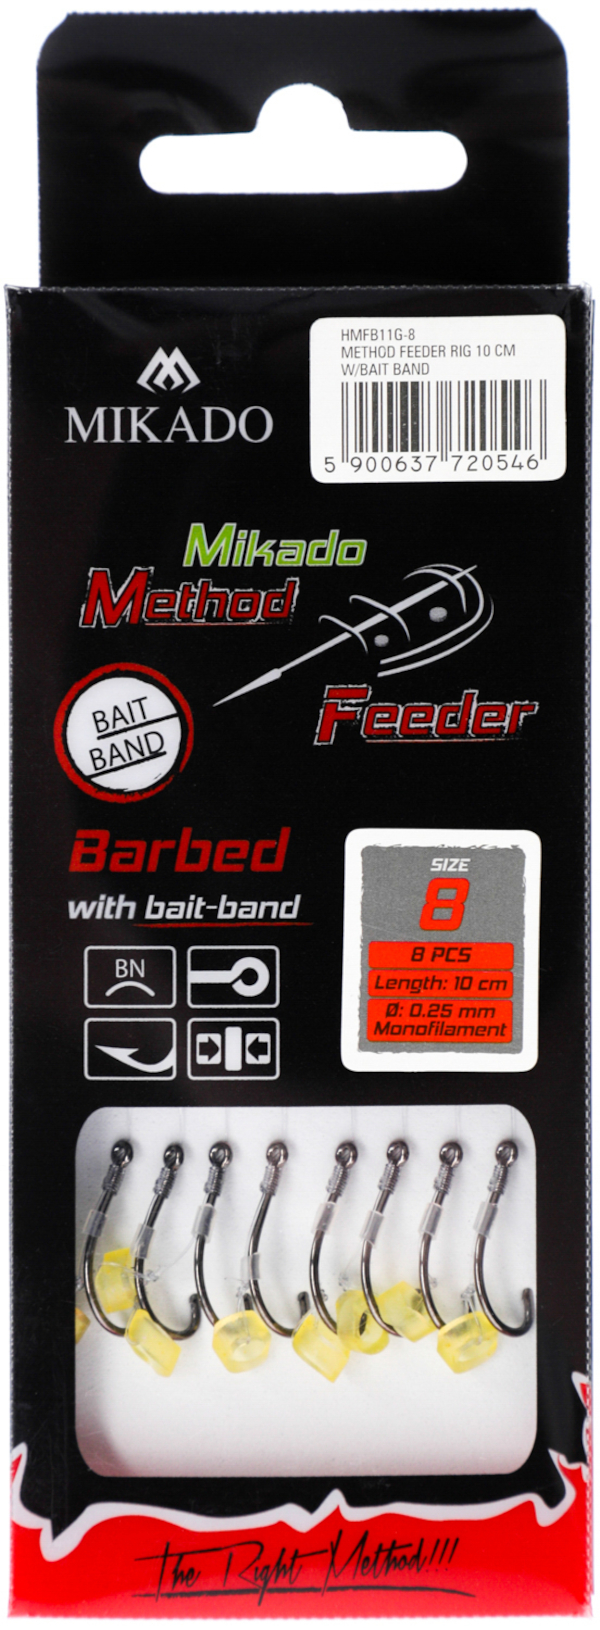 Mikado Method Feeder Rig With Baitband